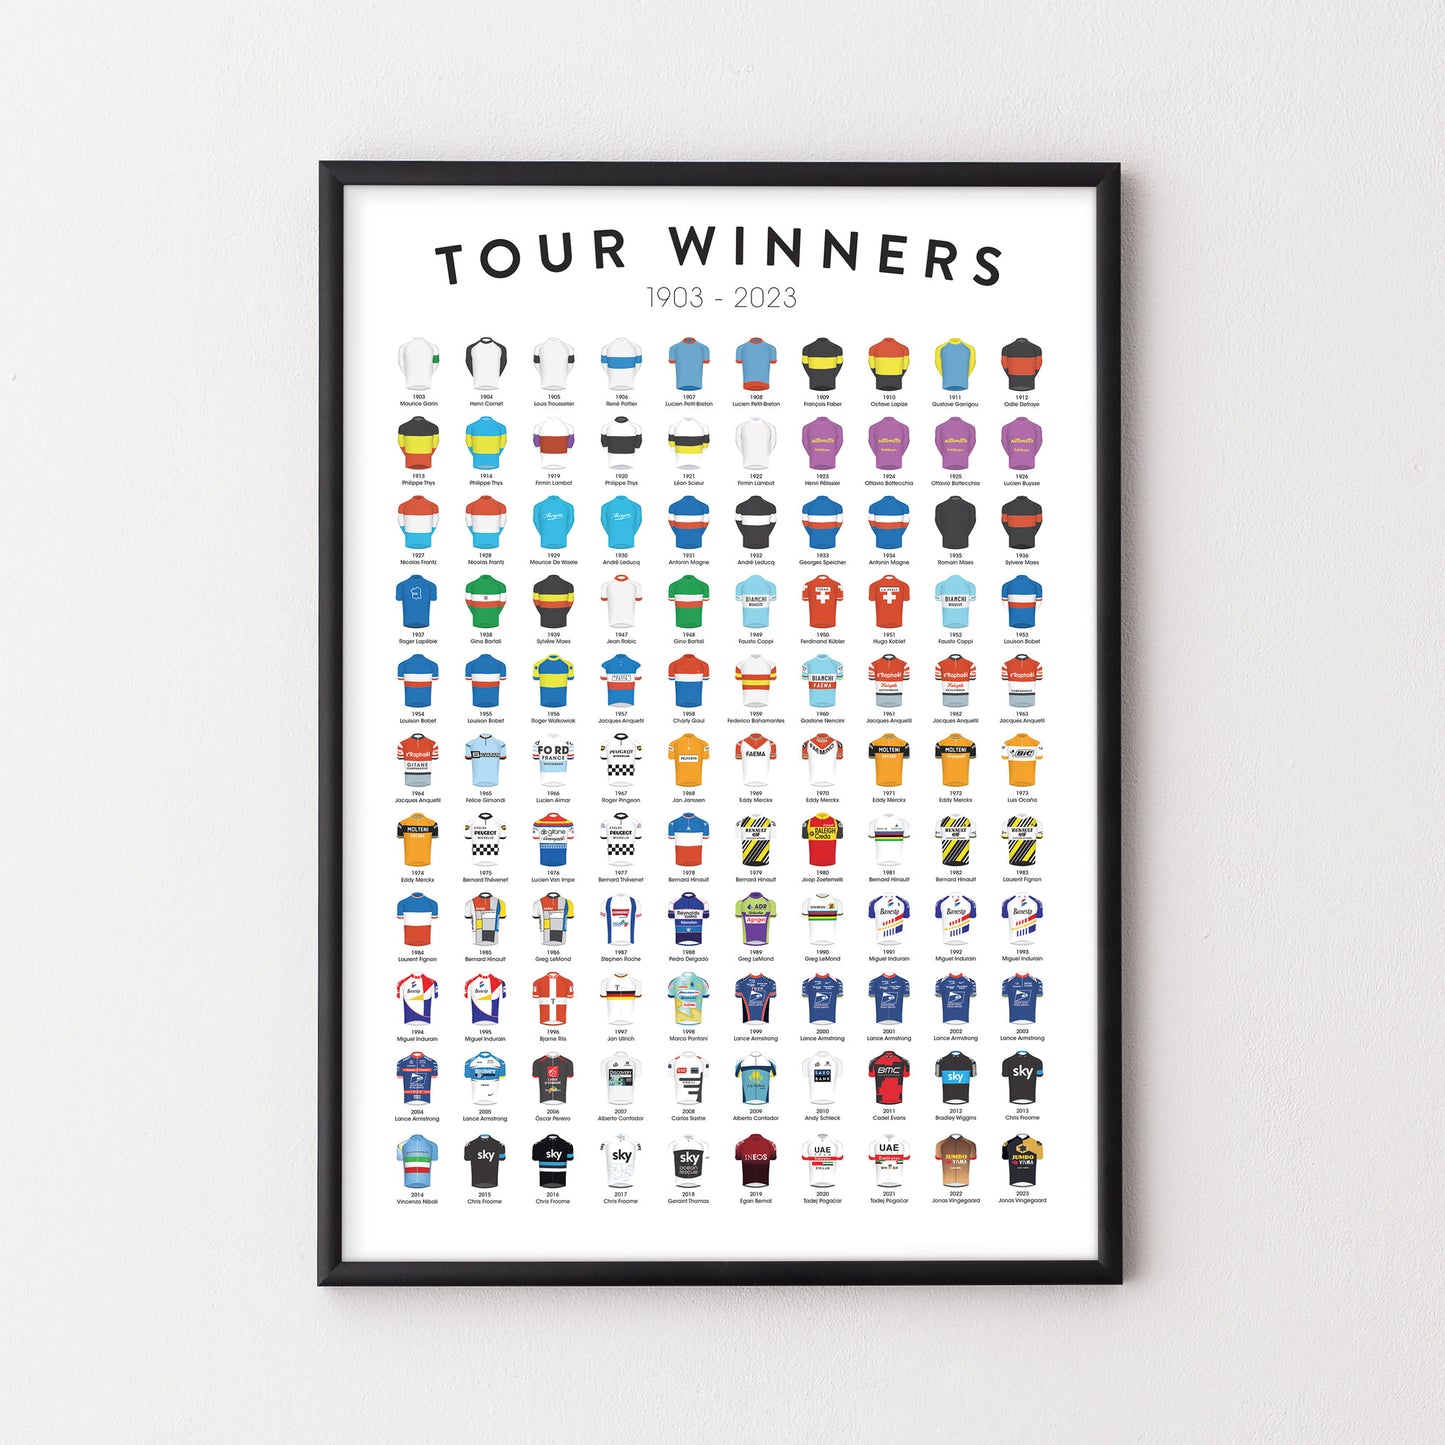 Framed Tour Winners Print